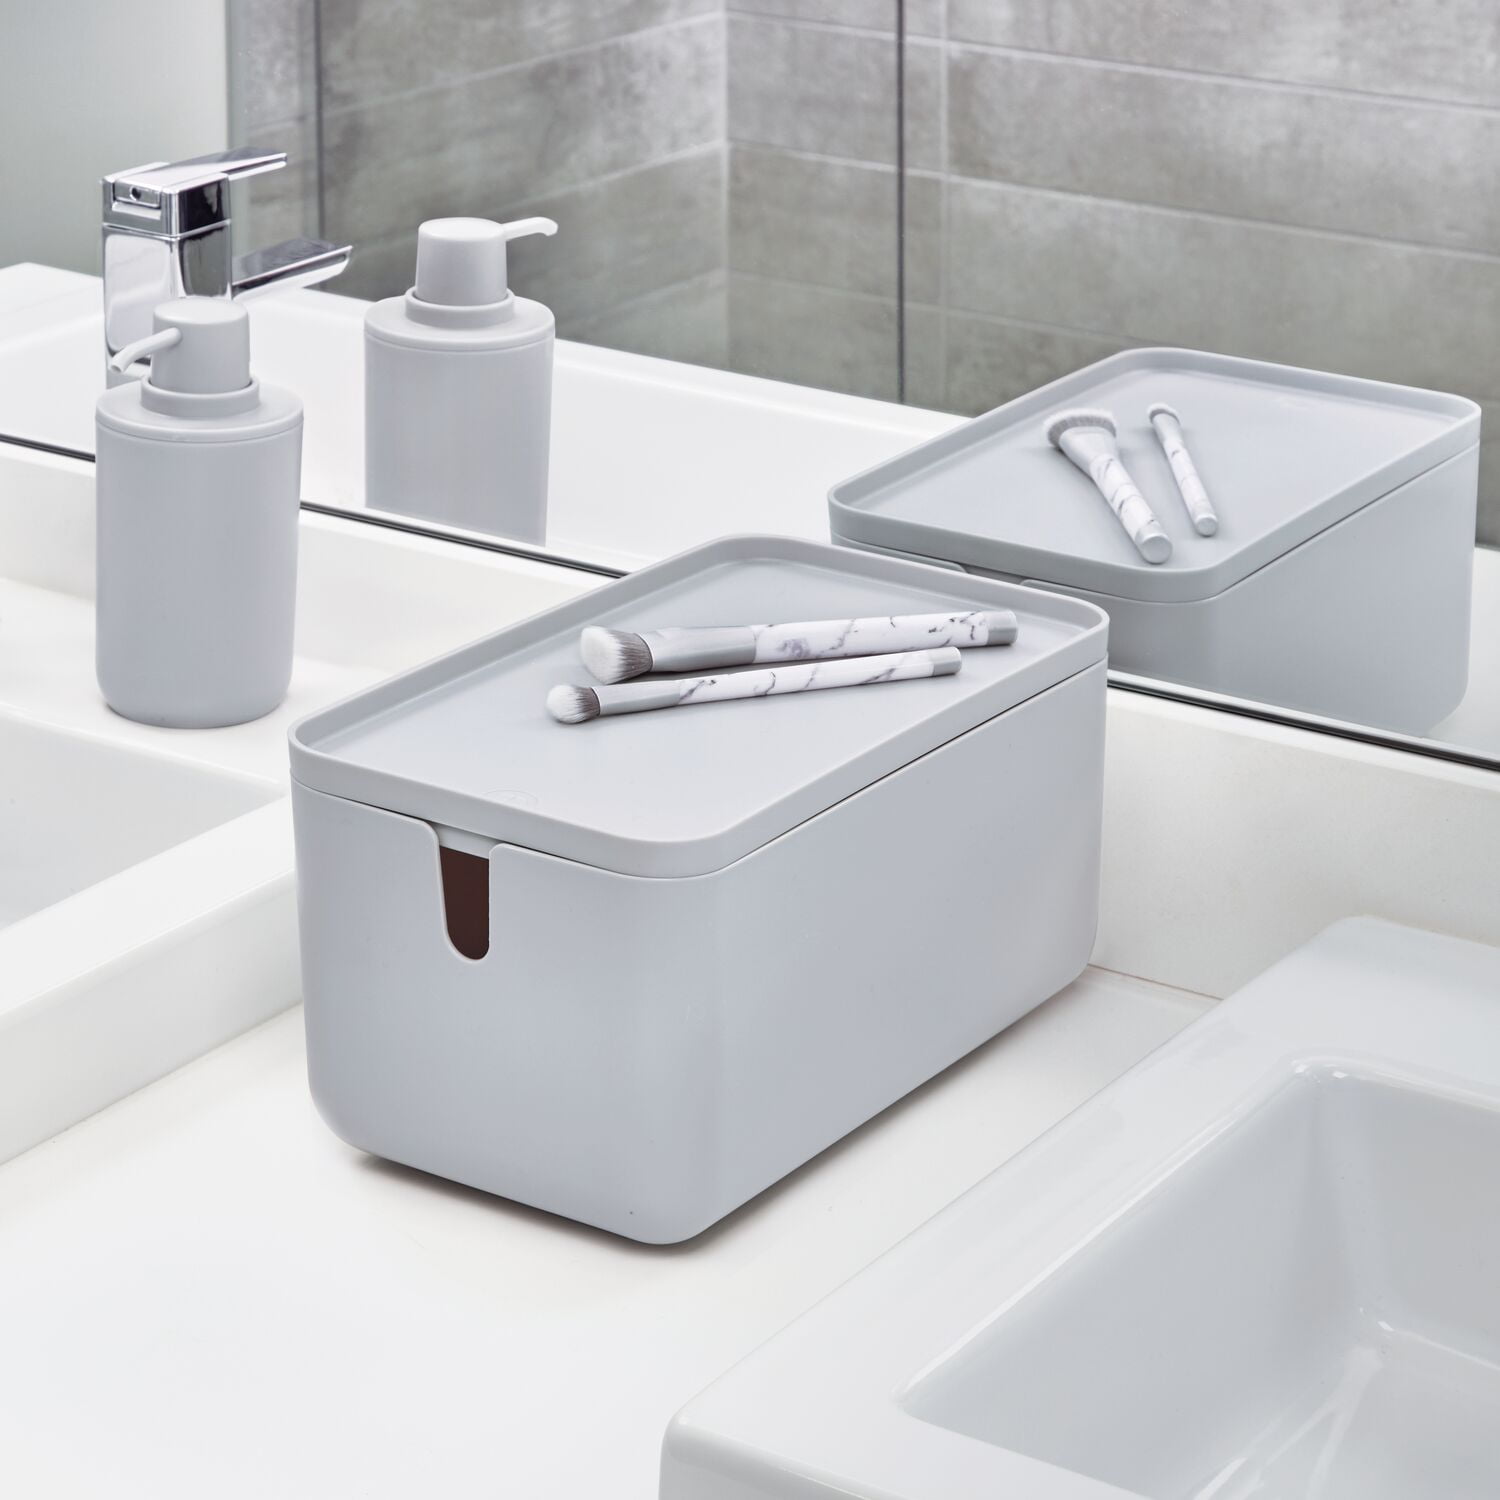  iDesign Cade Bathroom Accessories, 15.5 cm x 13.1 cm x 13.7 cm,  Soft Aqua : Home & Kitchen